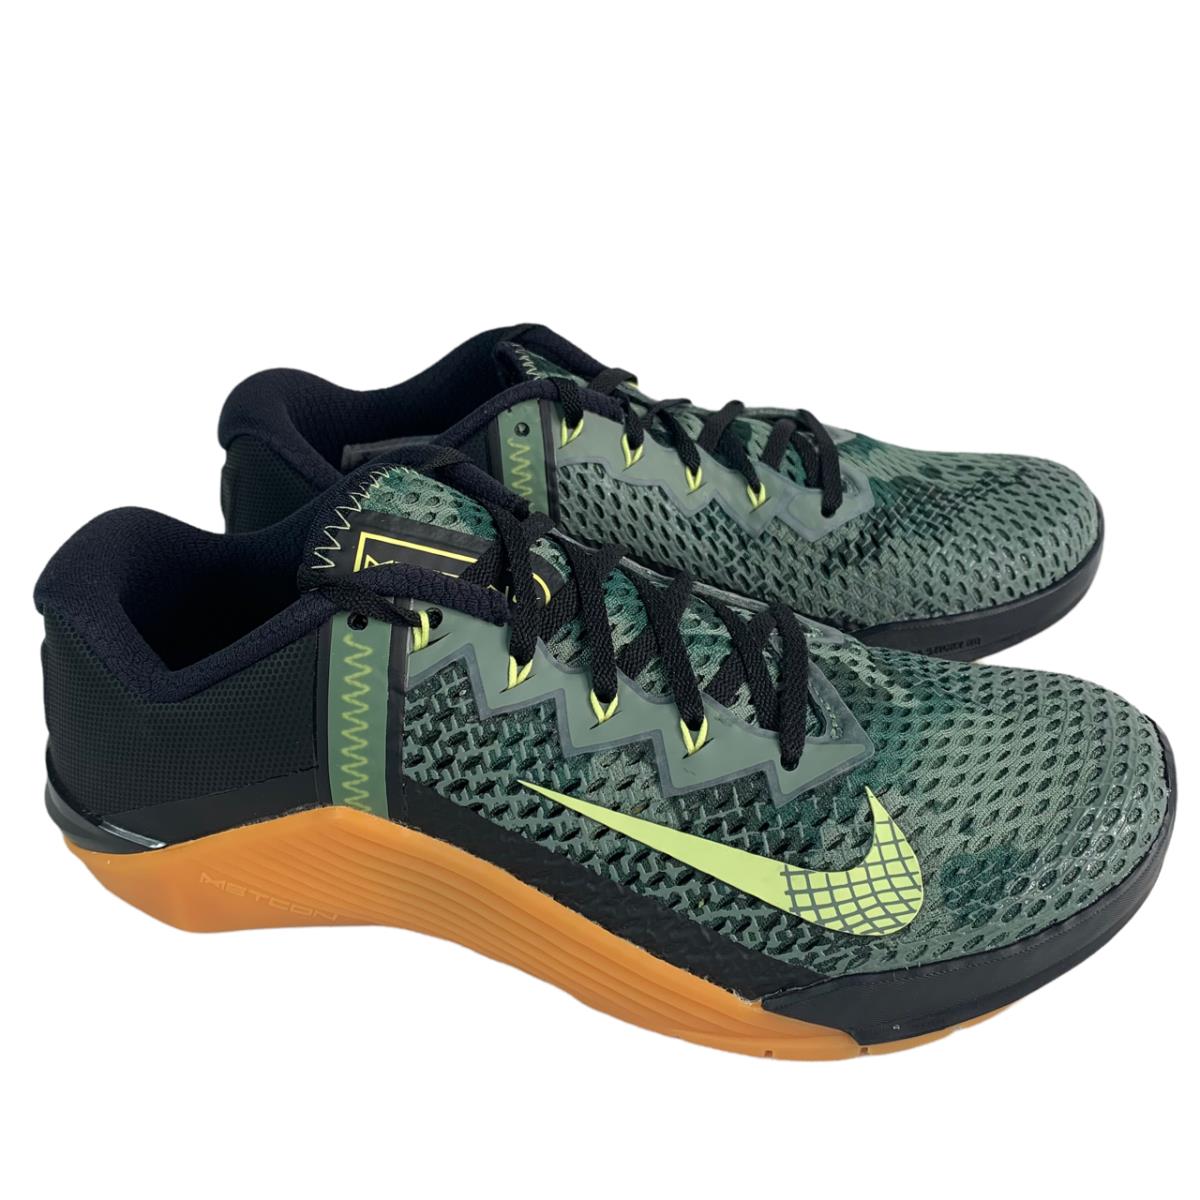 Nike Metcon 6 Black/limelight Training Shoe Men`s Size 8.5 CK9388 032